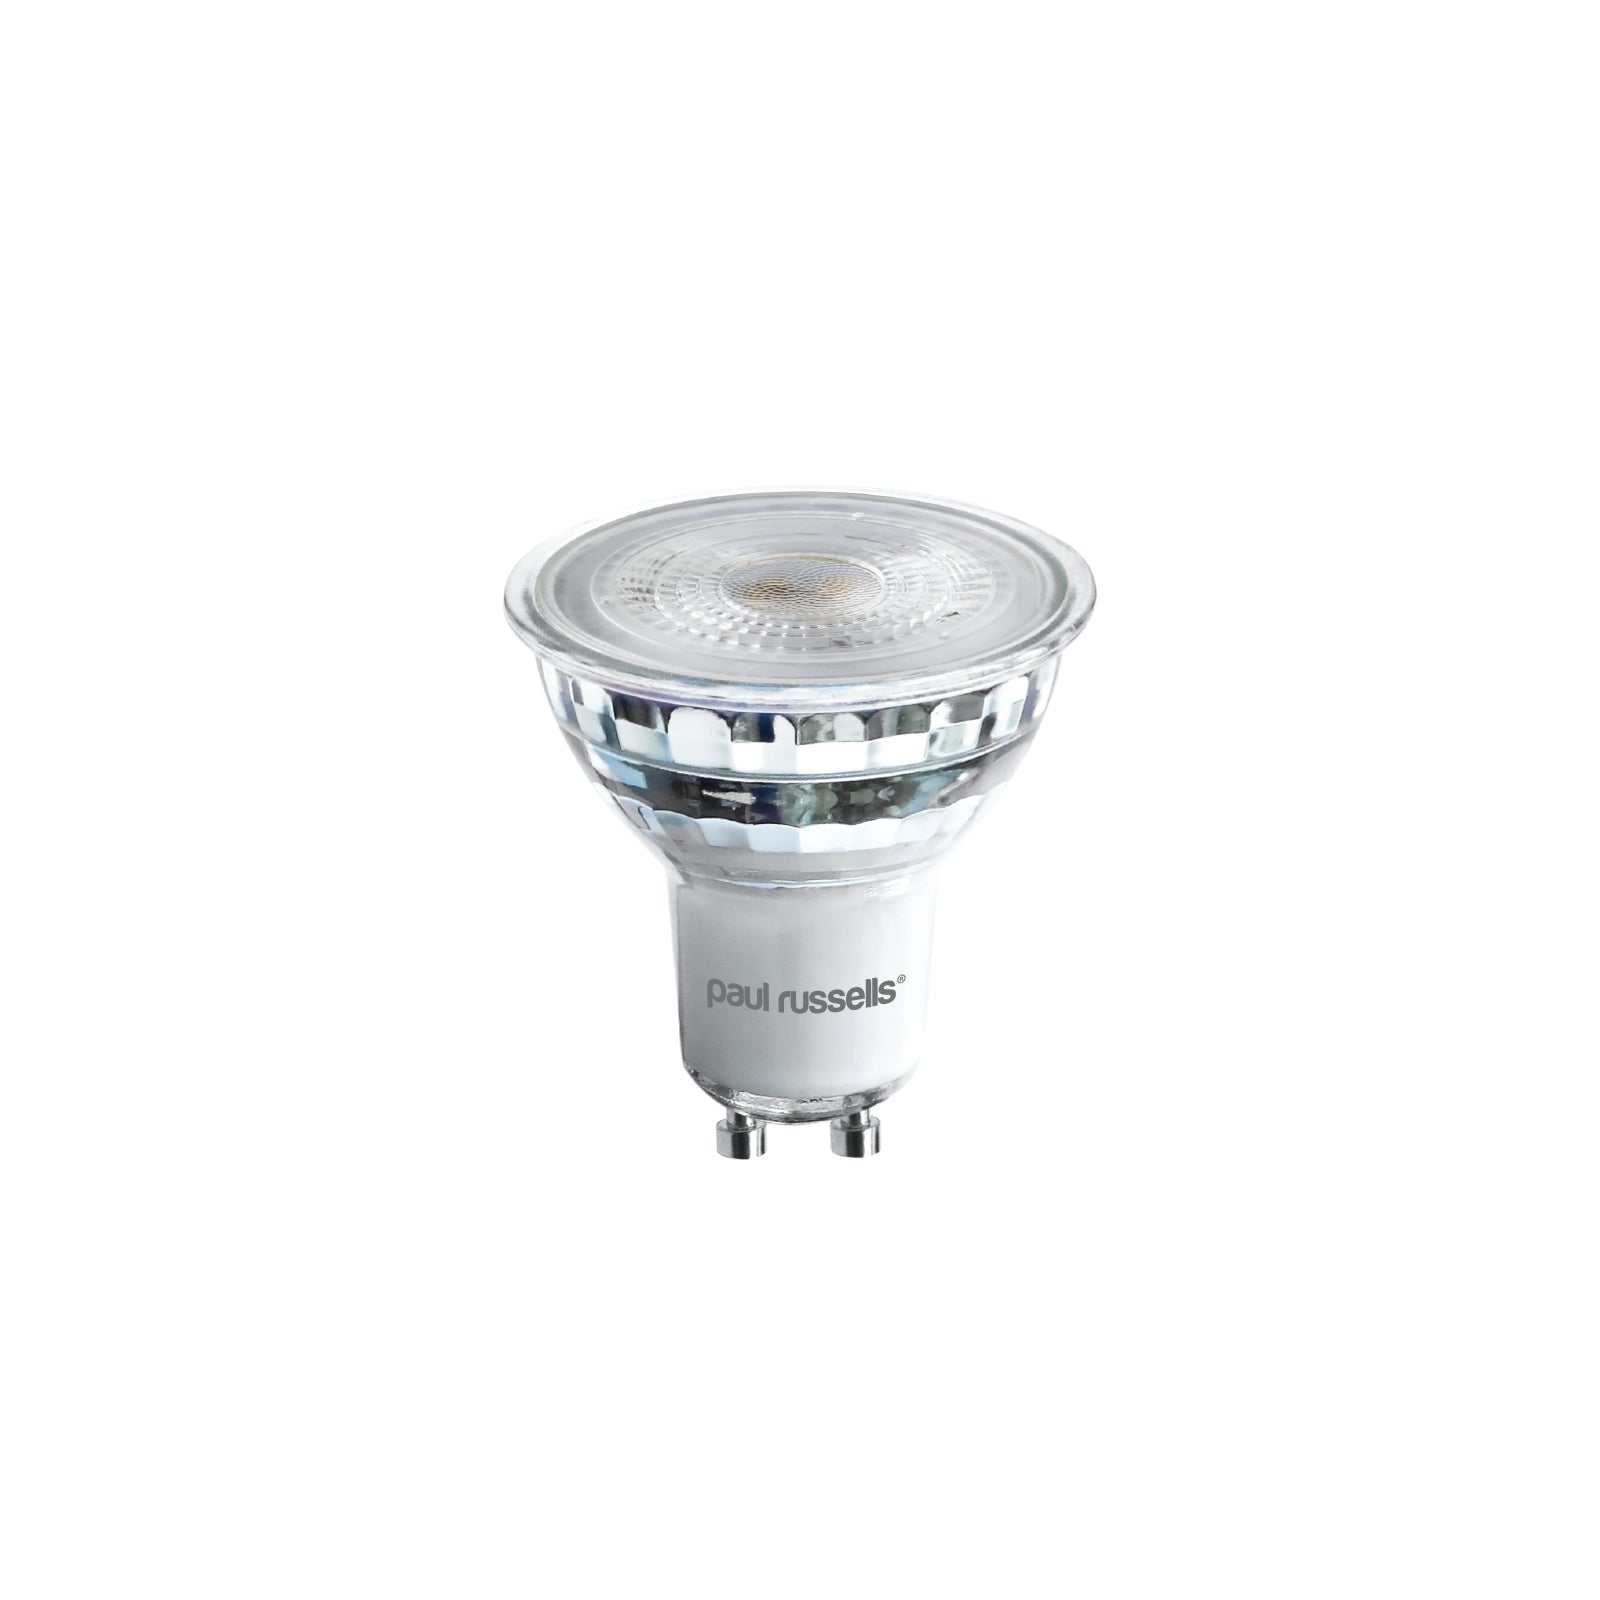 L006 LED Dimmable GU10 4.5W=50W Spot Light Bulbs Cool White